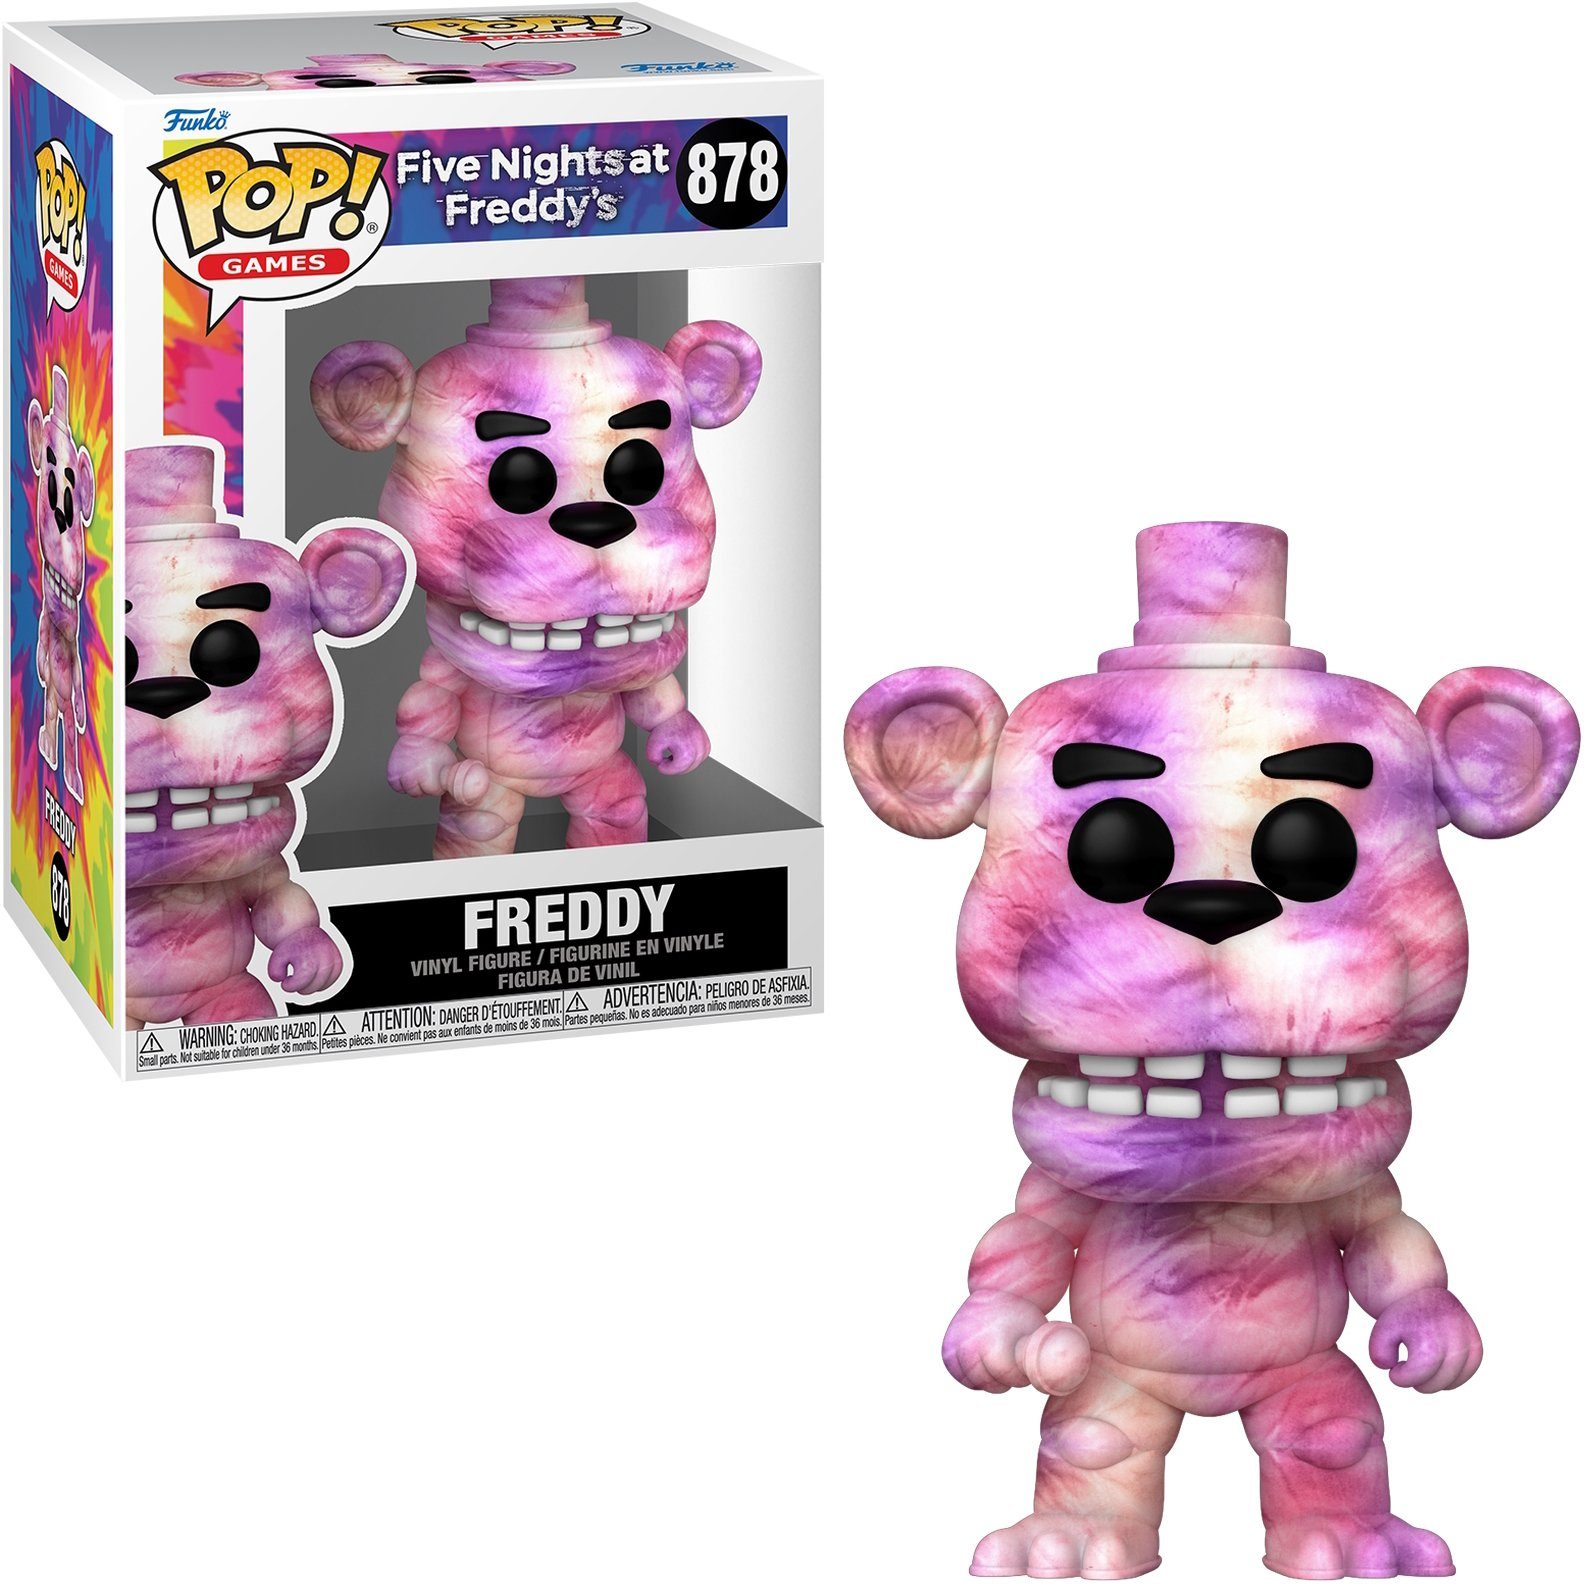 - Five Freddy Freddy's Nights Figur Spielfigur Pop! 878 at Funko